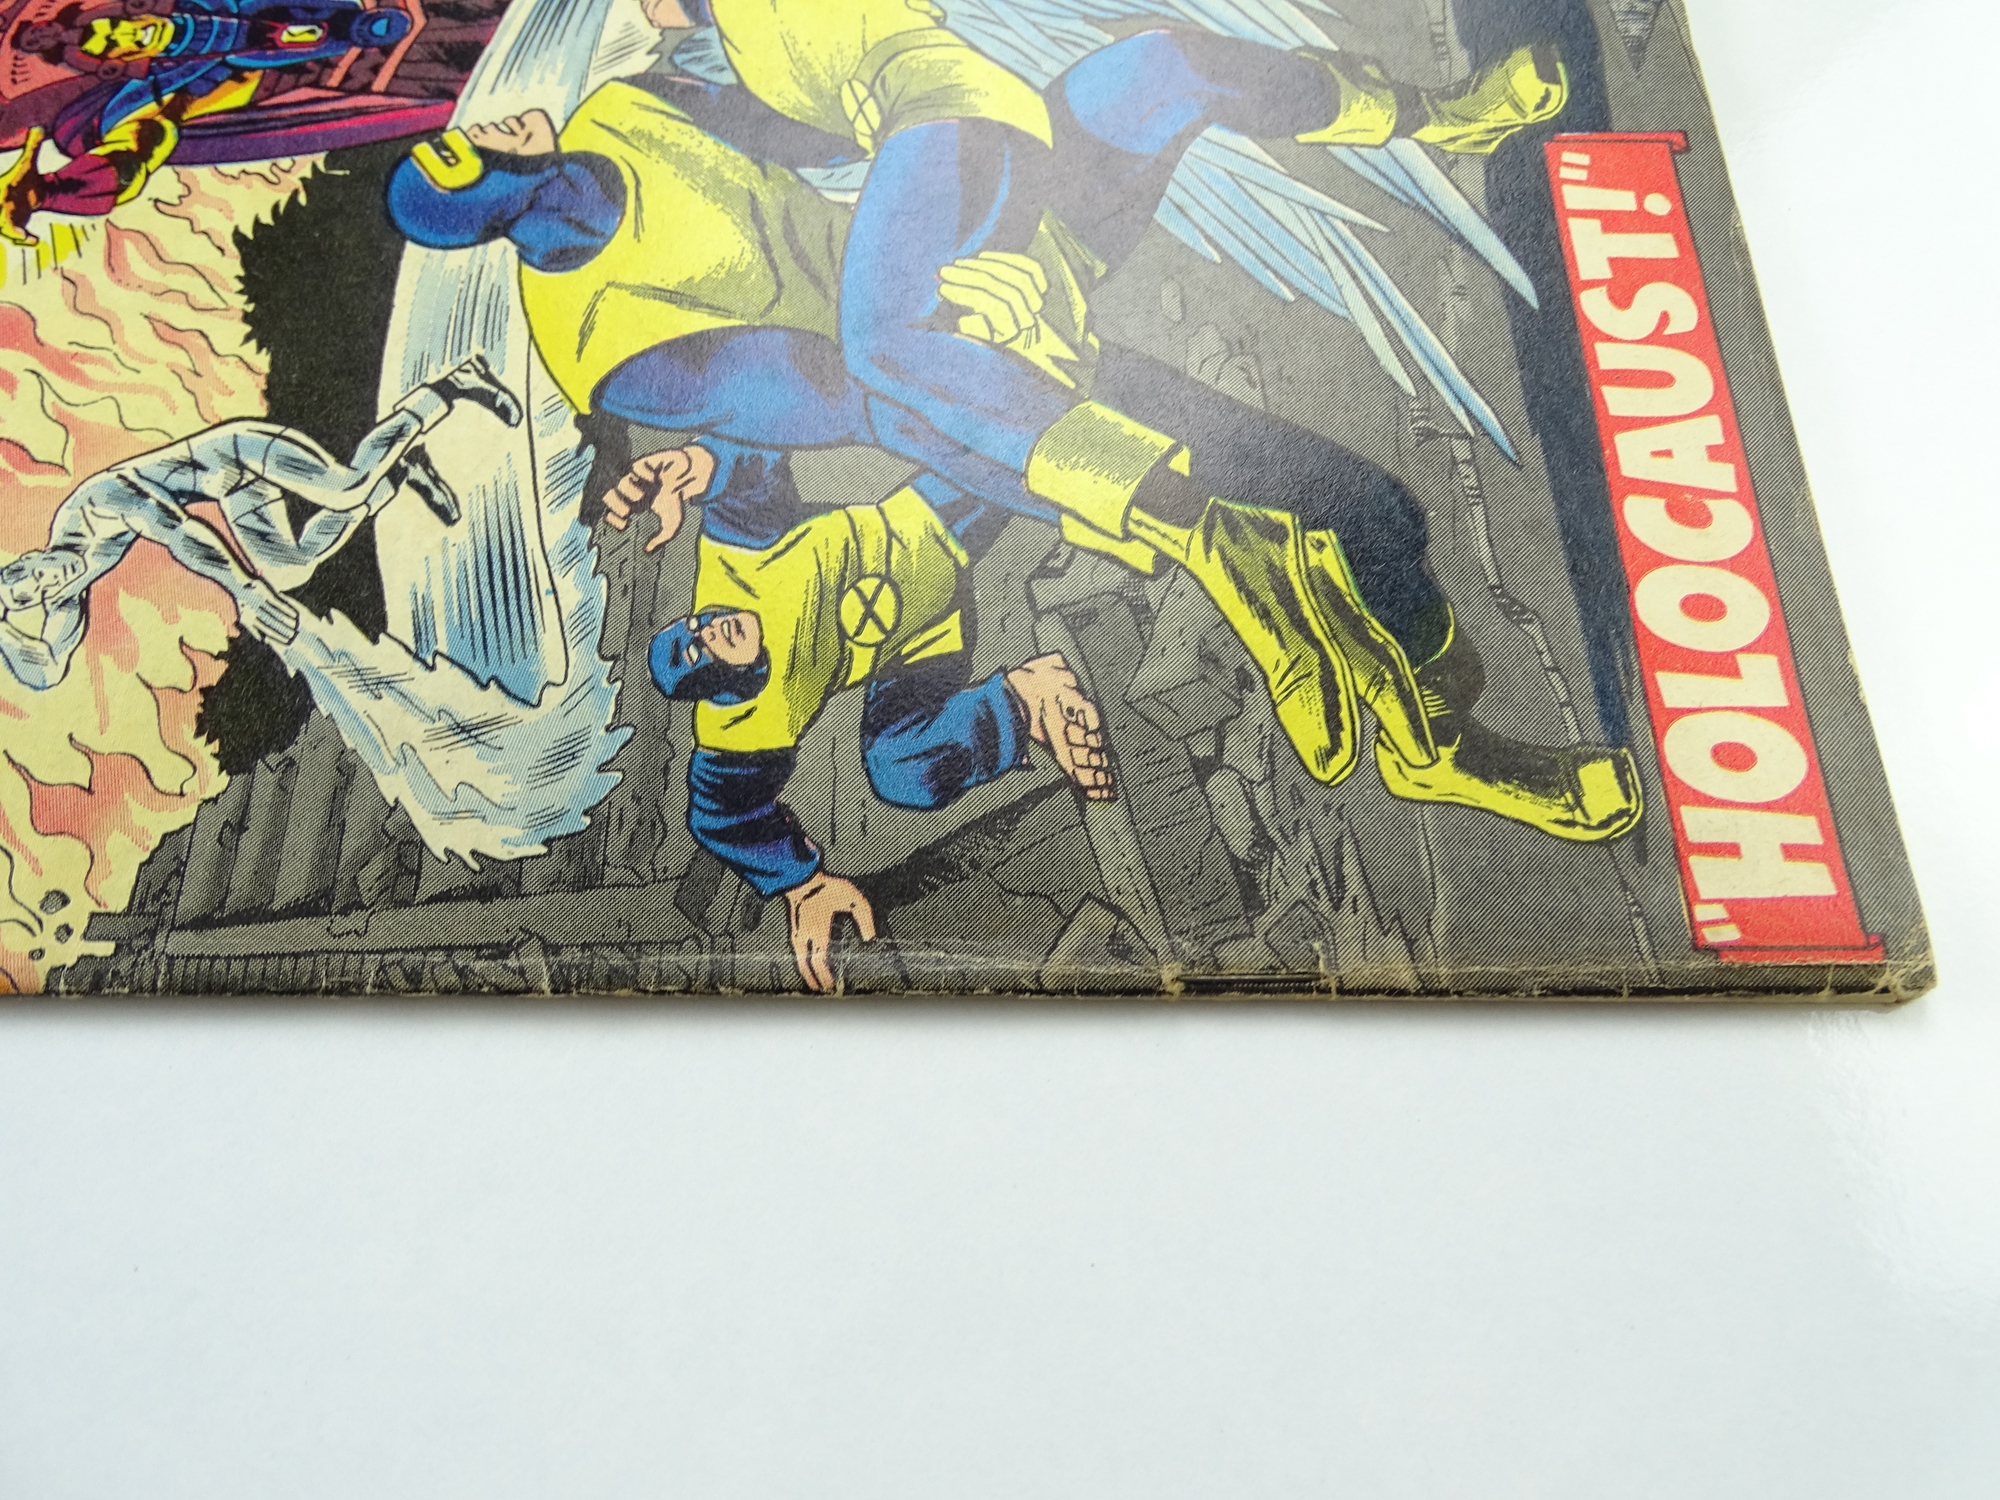 UNCANNY X-MEN # 26 - (1966 - MARVEL - Cents Copy) - X-Men battle Kukulcan (El Tigre) - Flat/Unfolded - Image 7 of 7